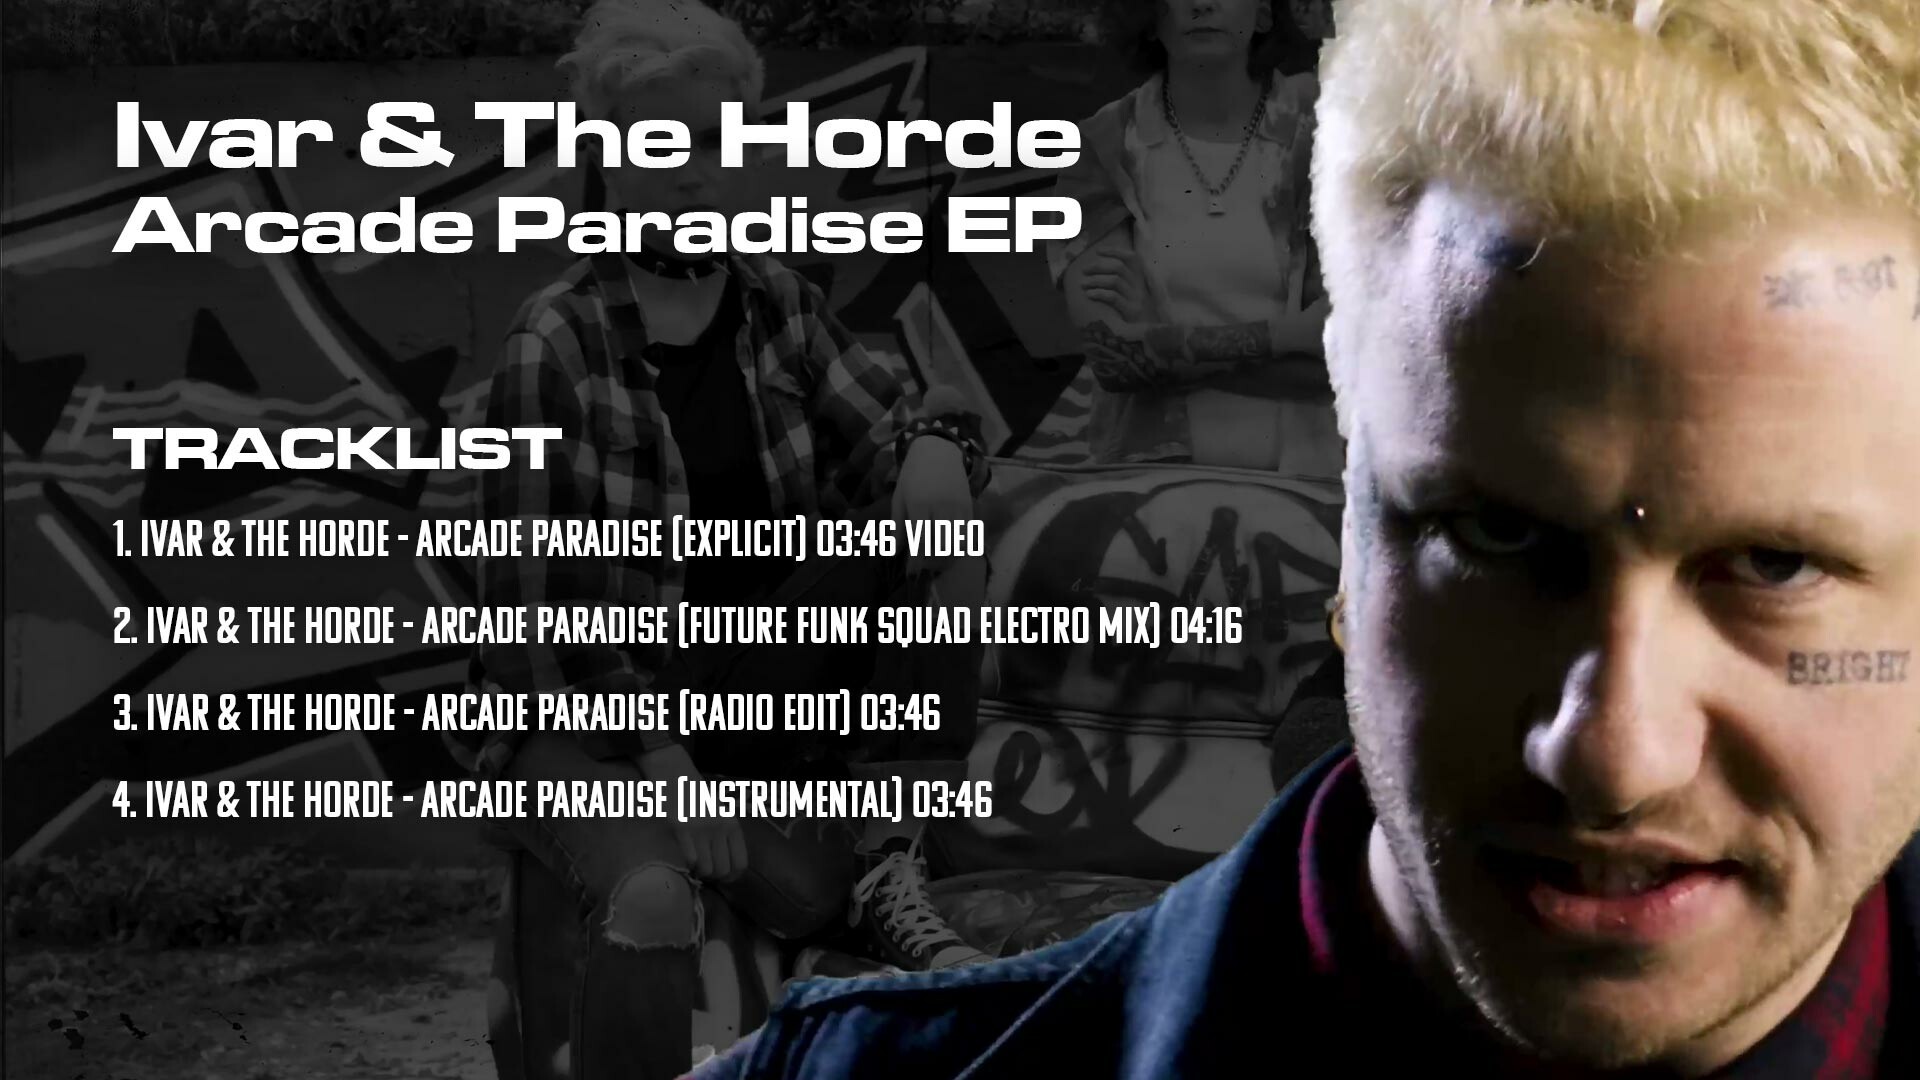 Arcade Paradise - Arcade Paradise EP en Steam